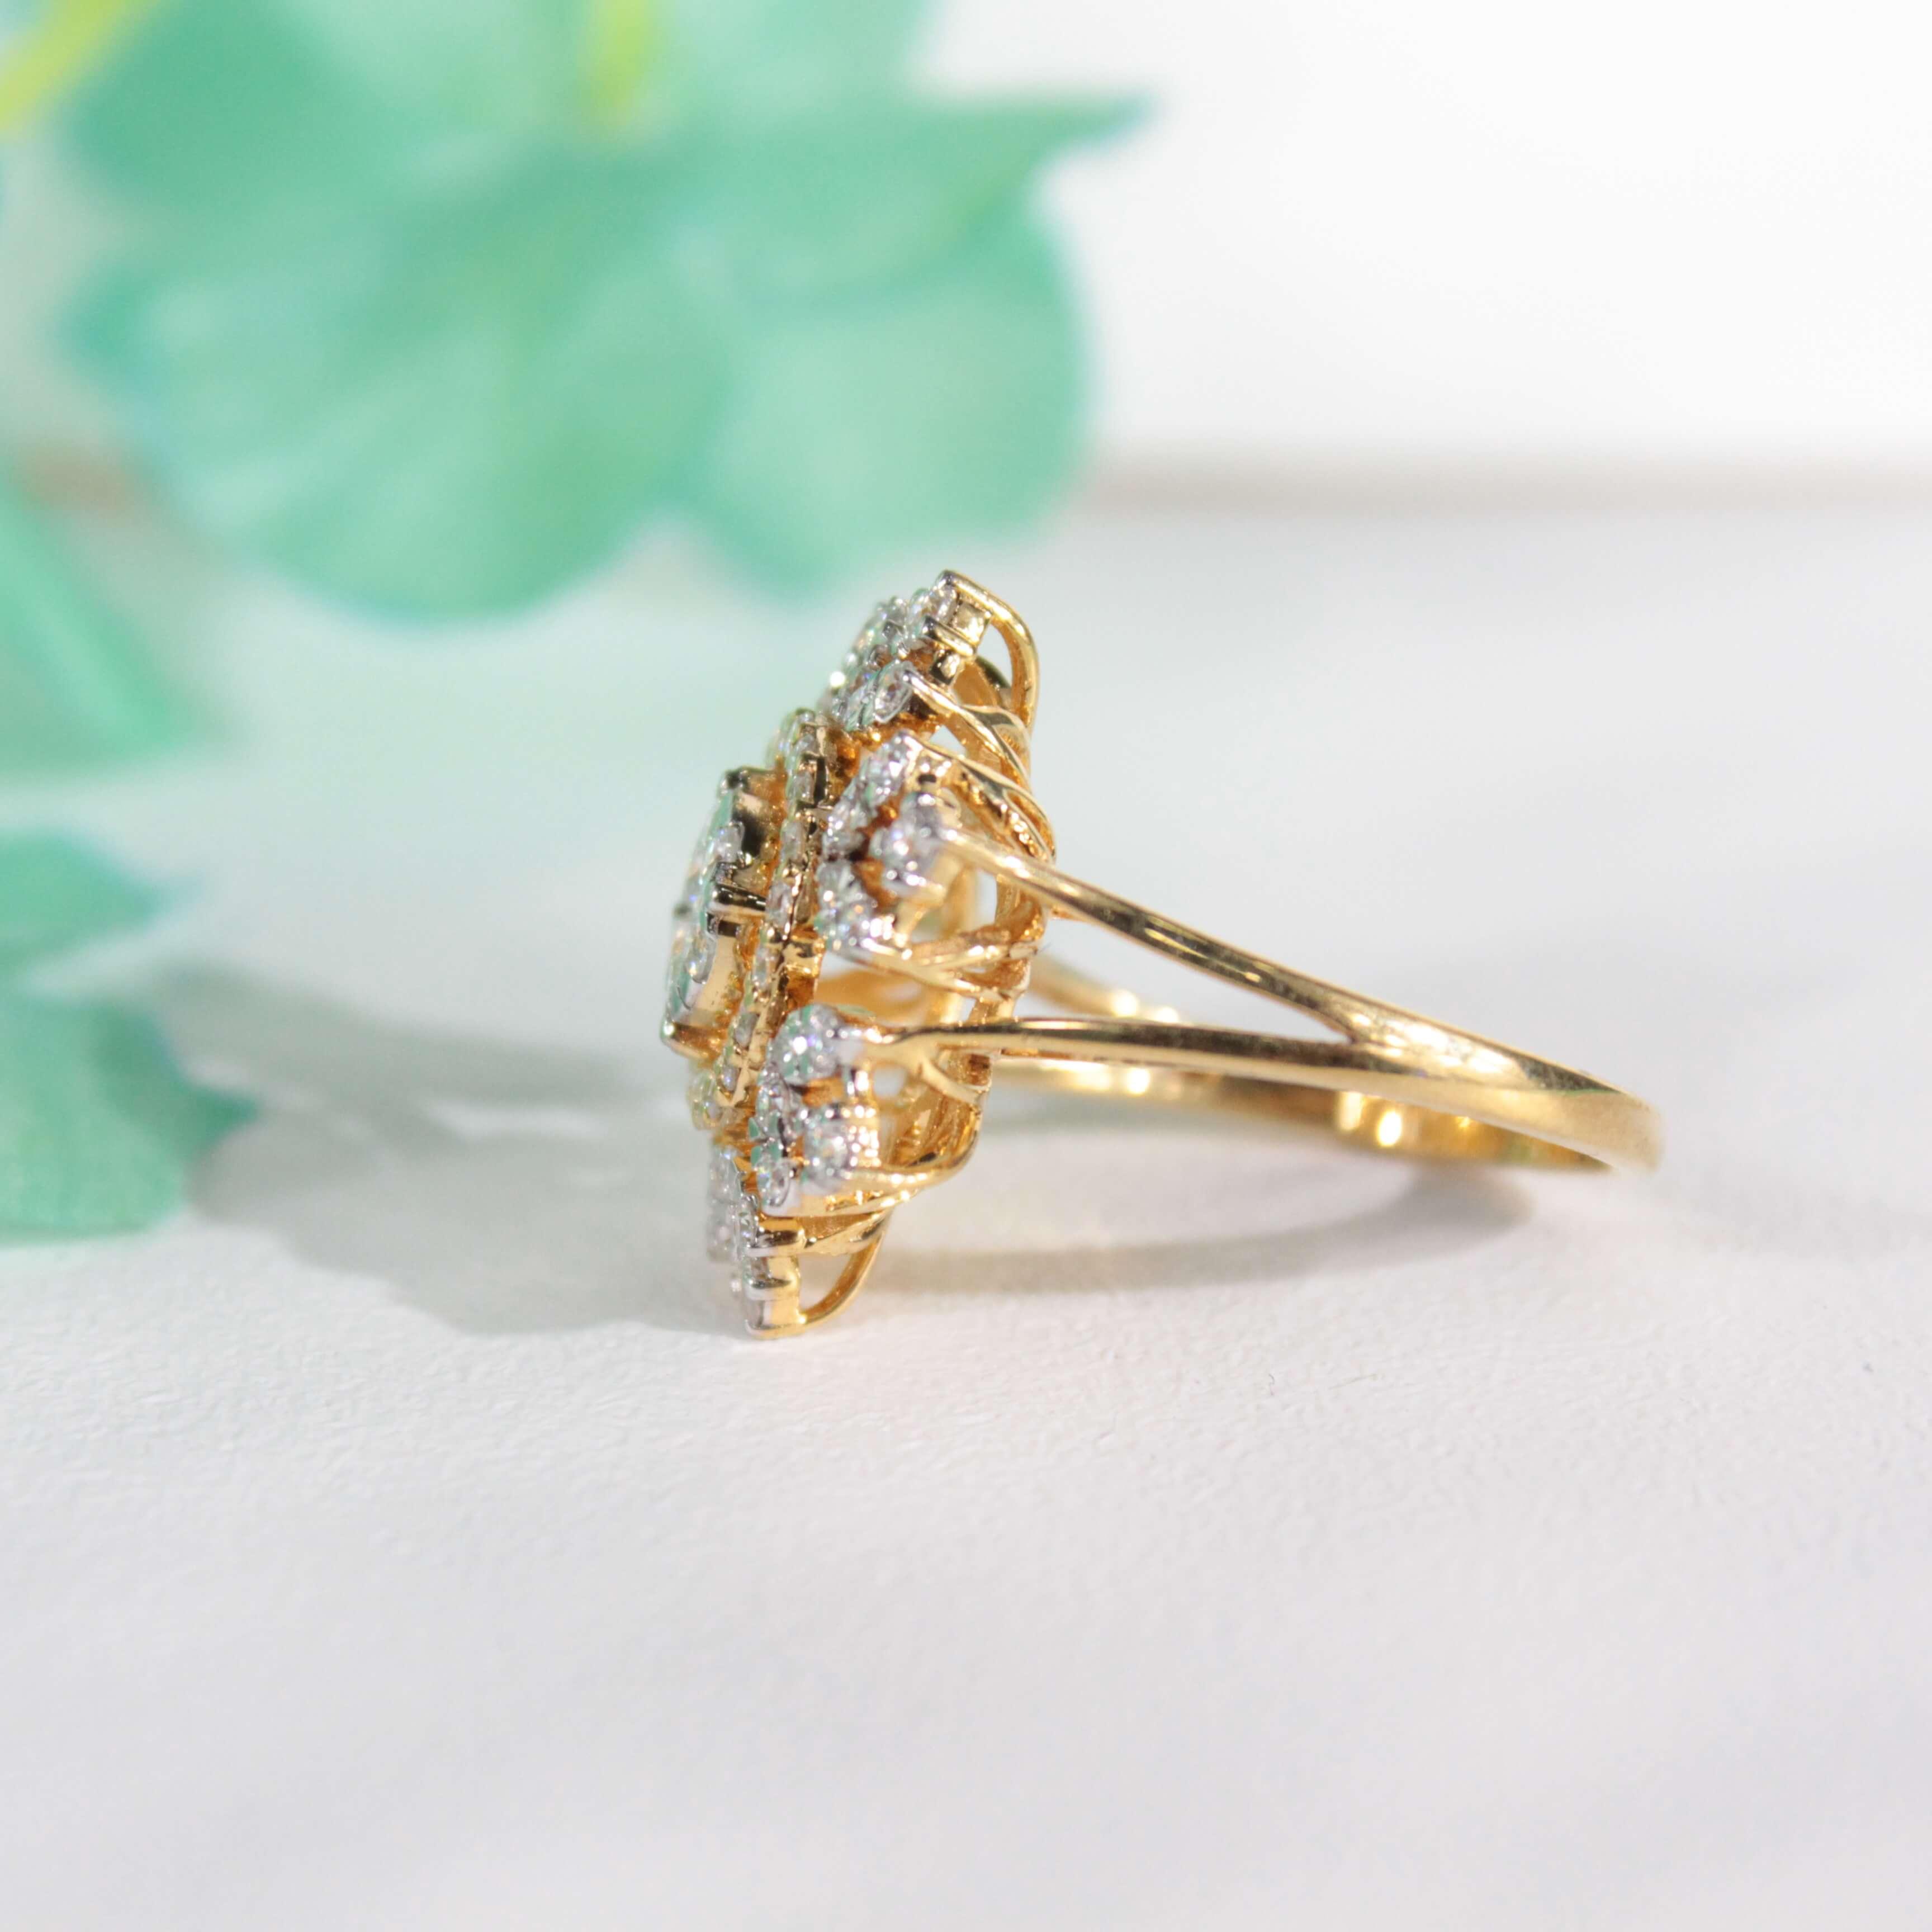 Nitala Silver Fashion Ring For Women - Shinez By Baxi Jewellers